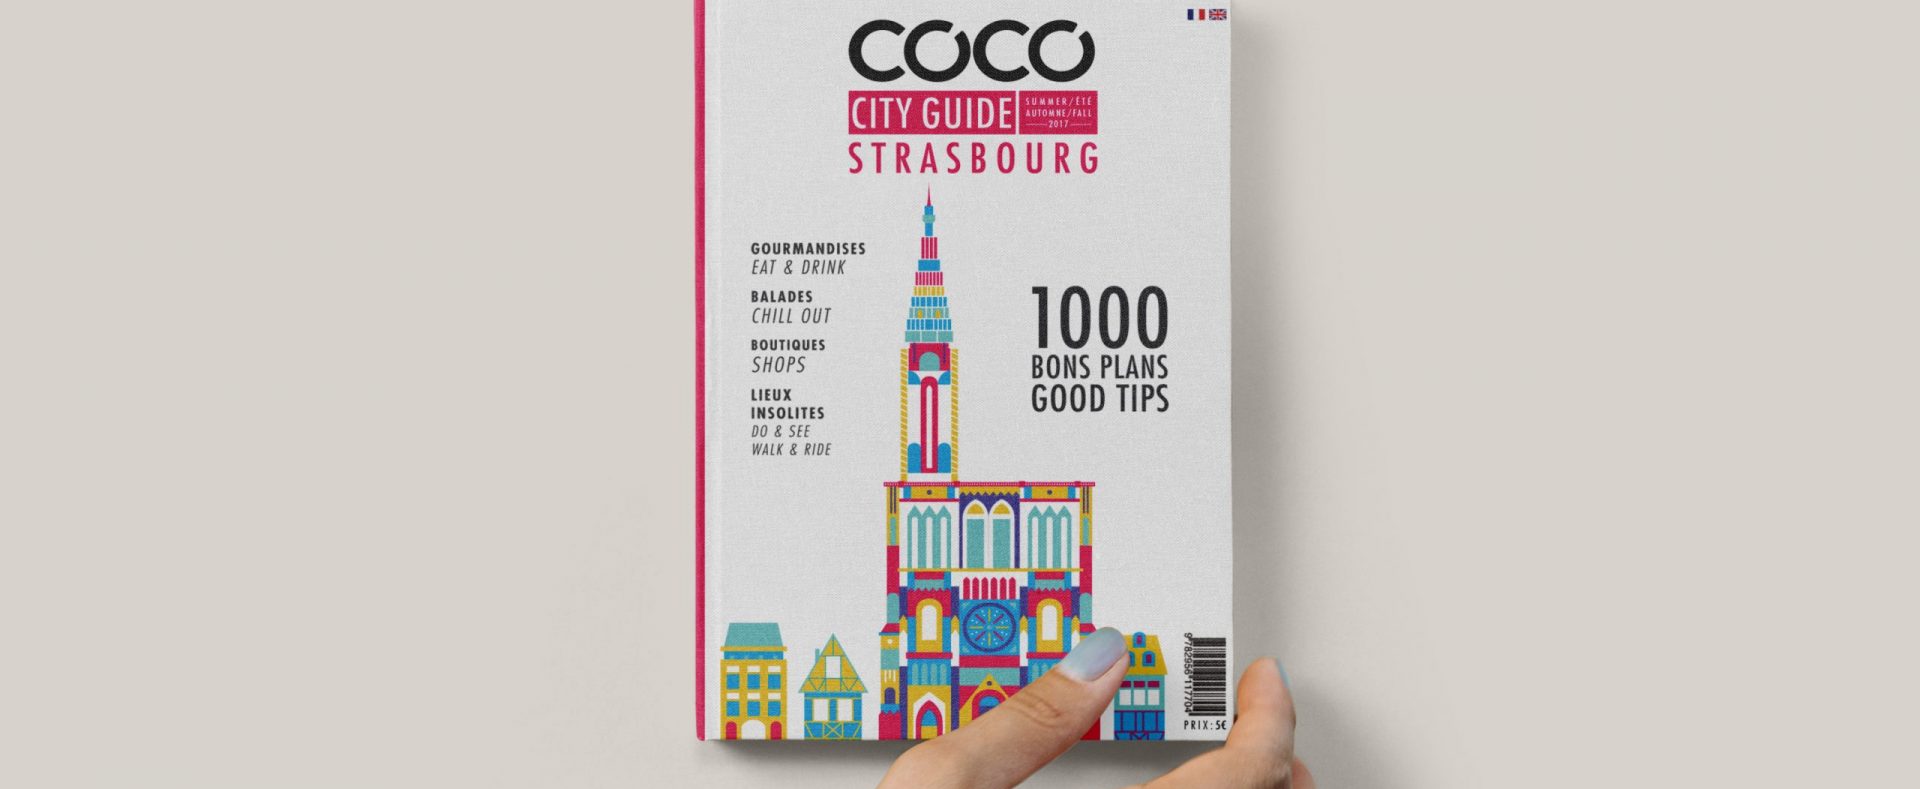 Coco city guide couverture copie